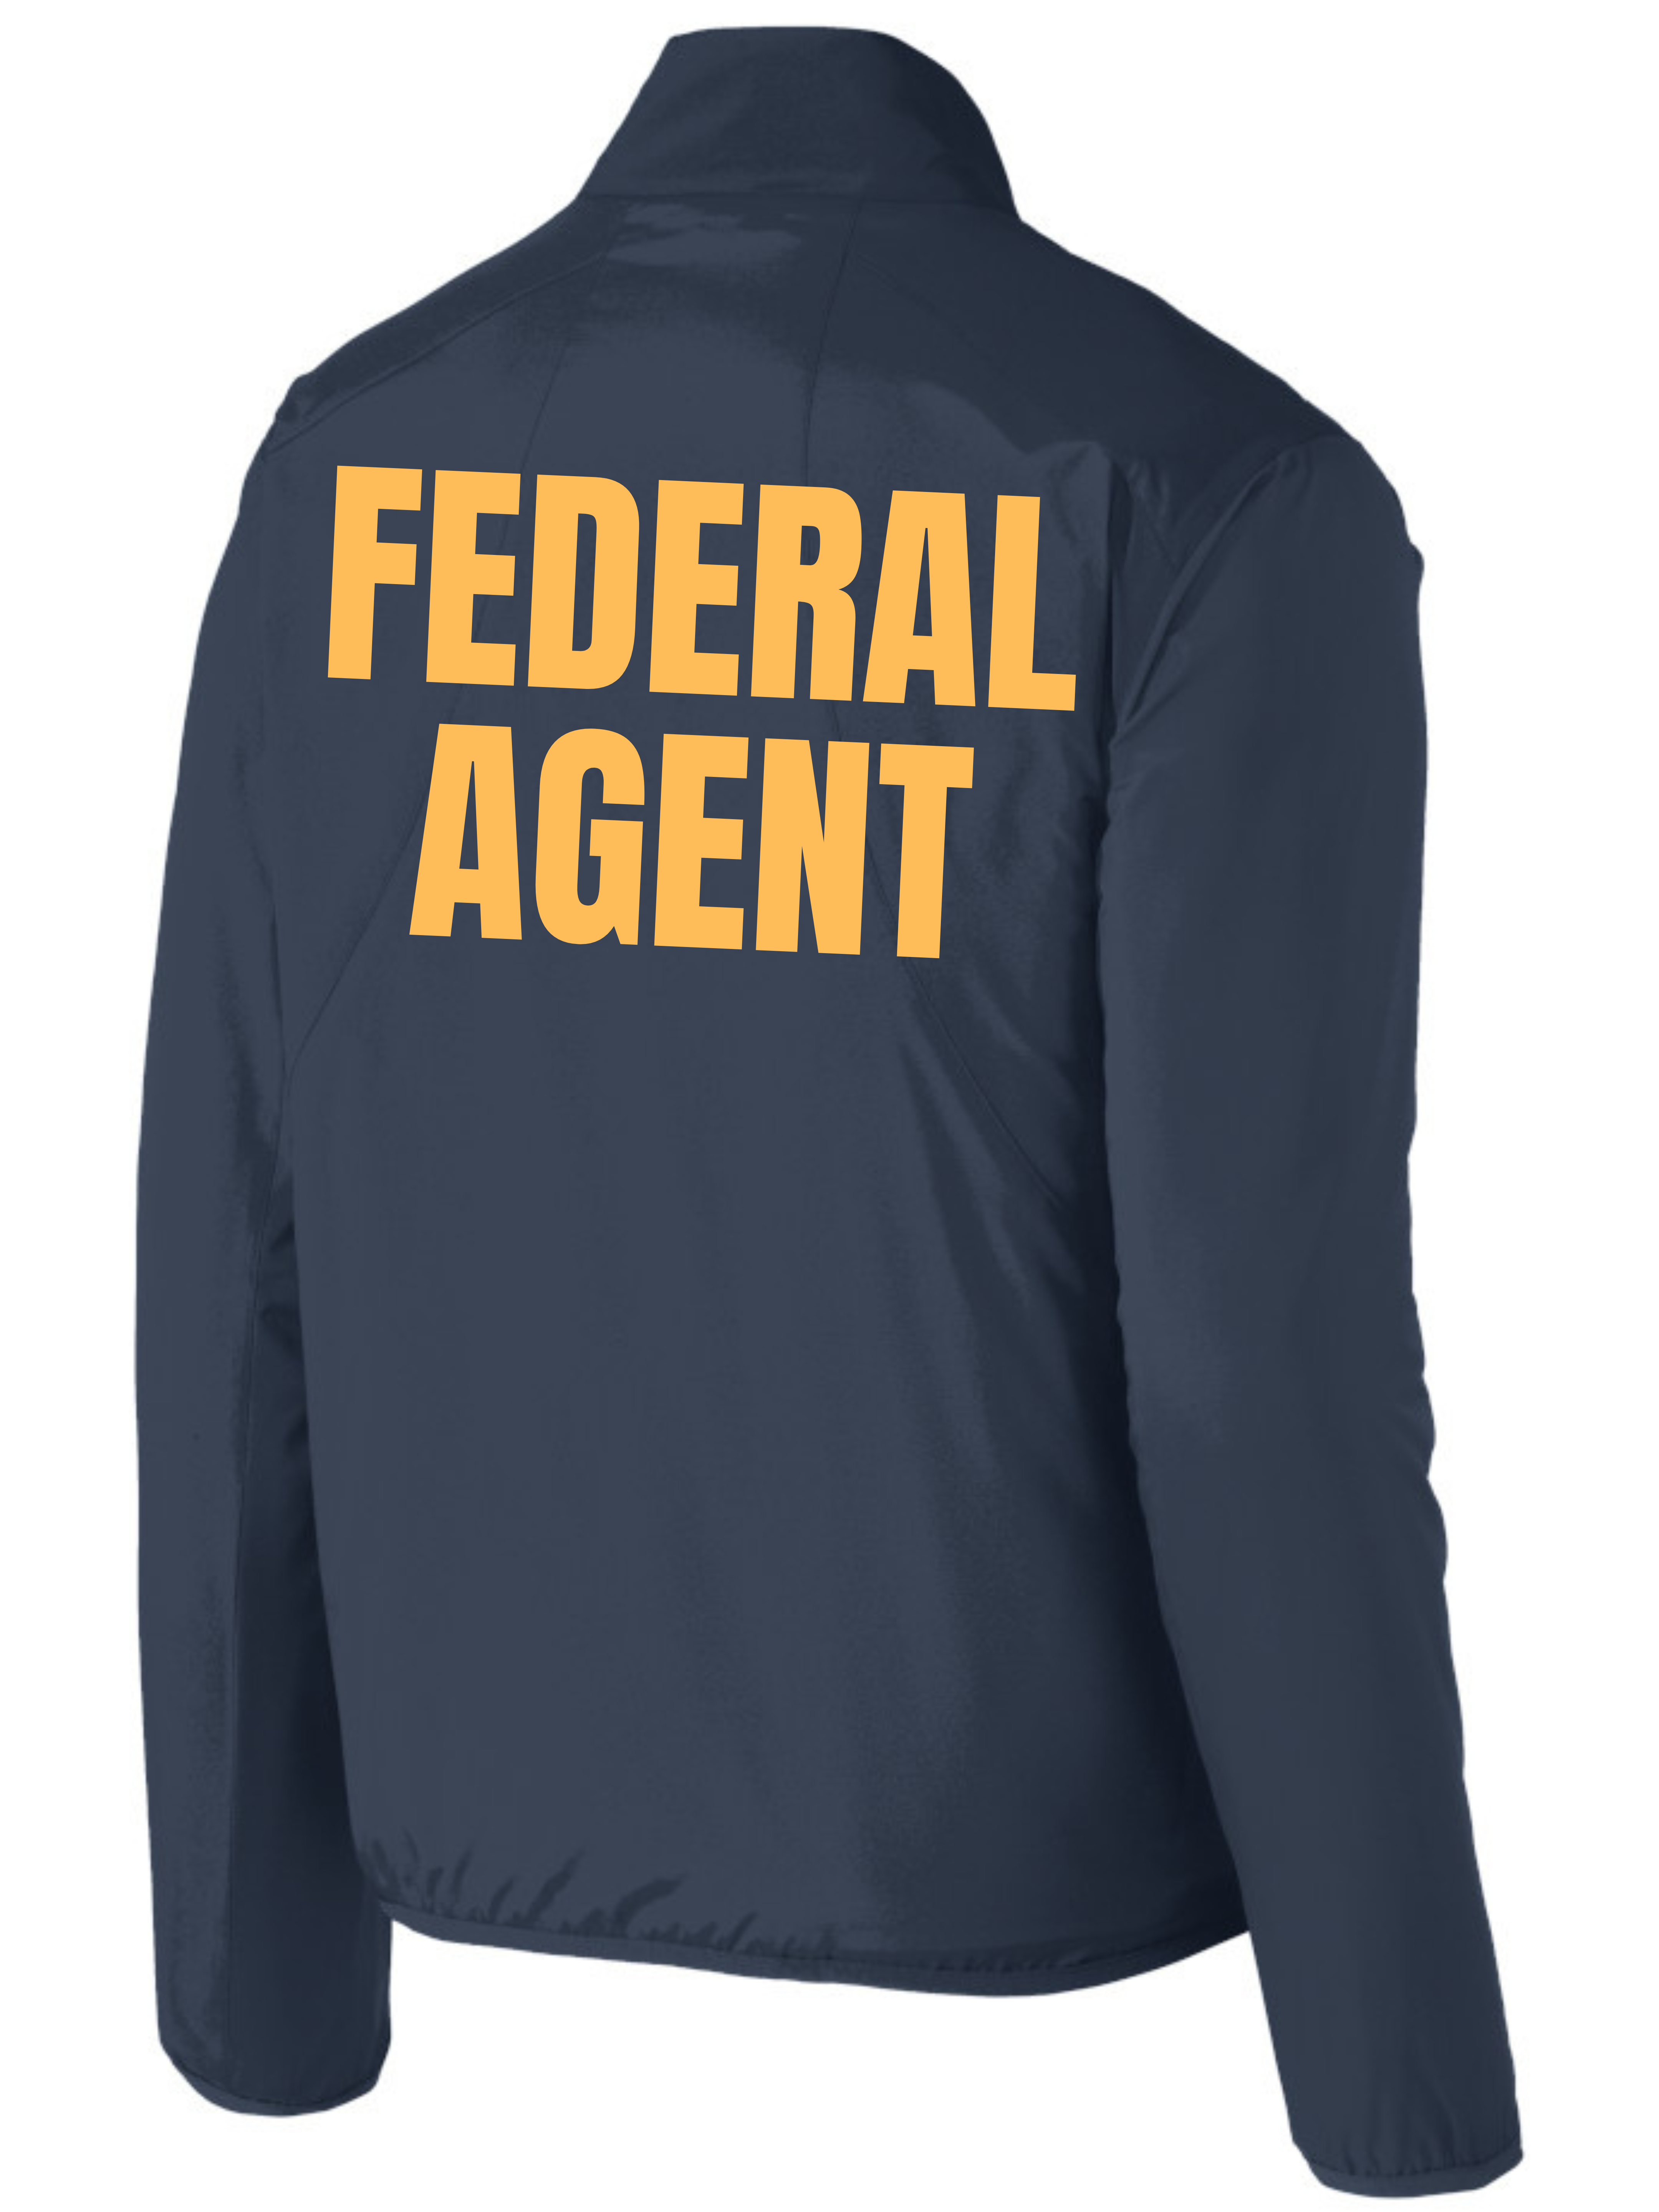 Federal Agent Identifier Jacket